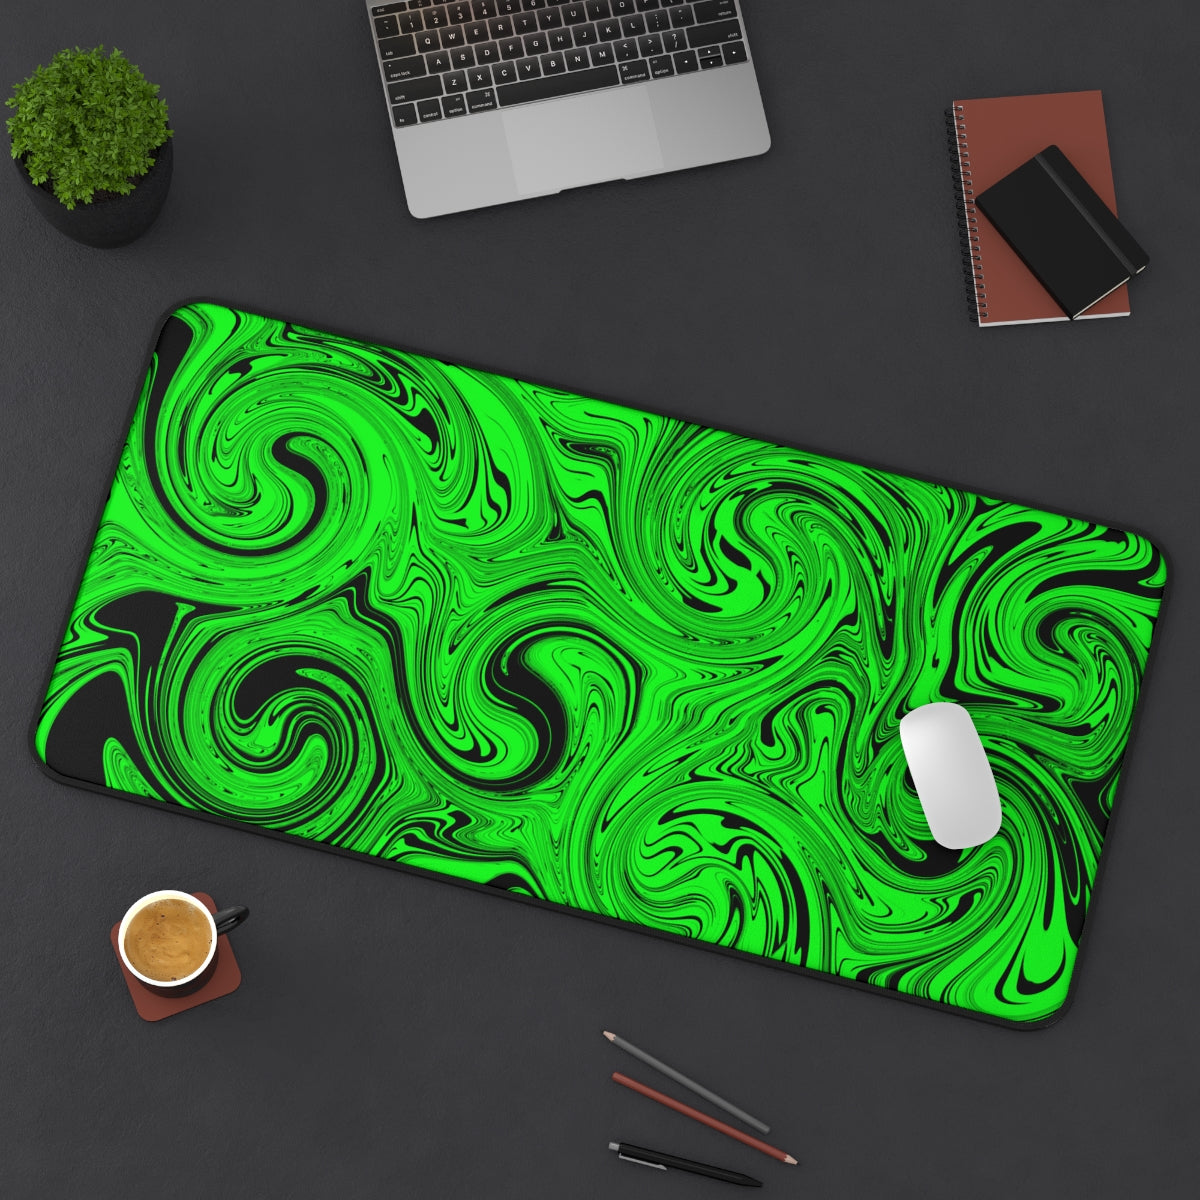 Green & Black Swirl Desk Mat - Desk Cookies